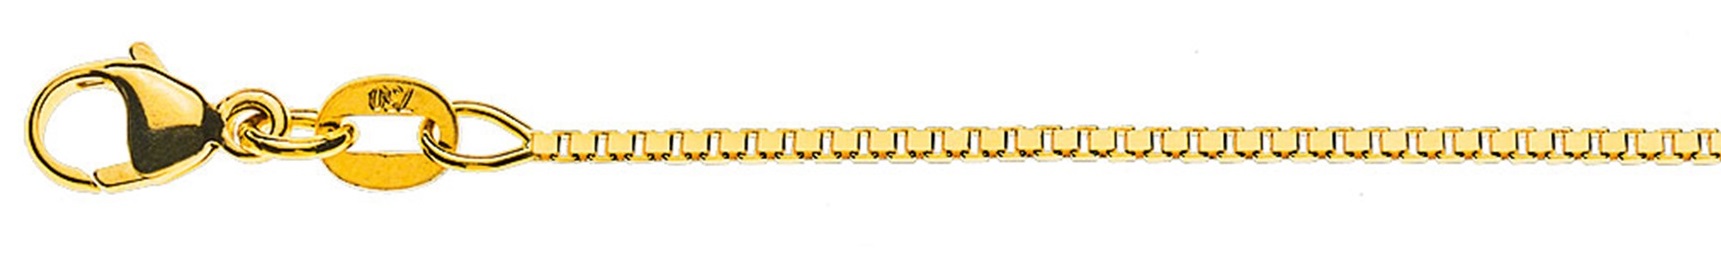 AURONOS Prestige Necklace yellow gold 18K Venetian chain diamond 45cm 1.1mm